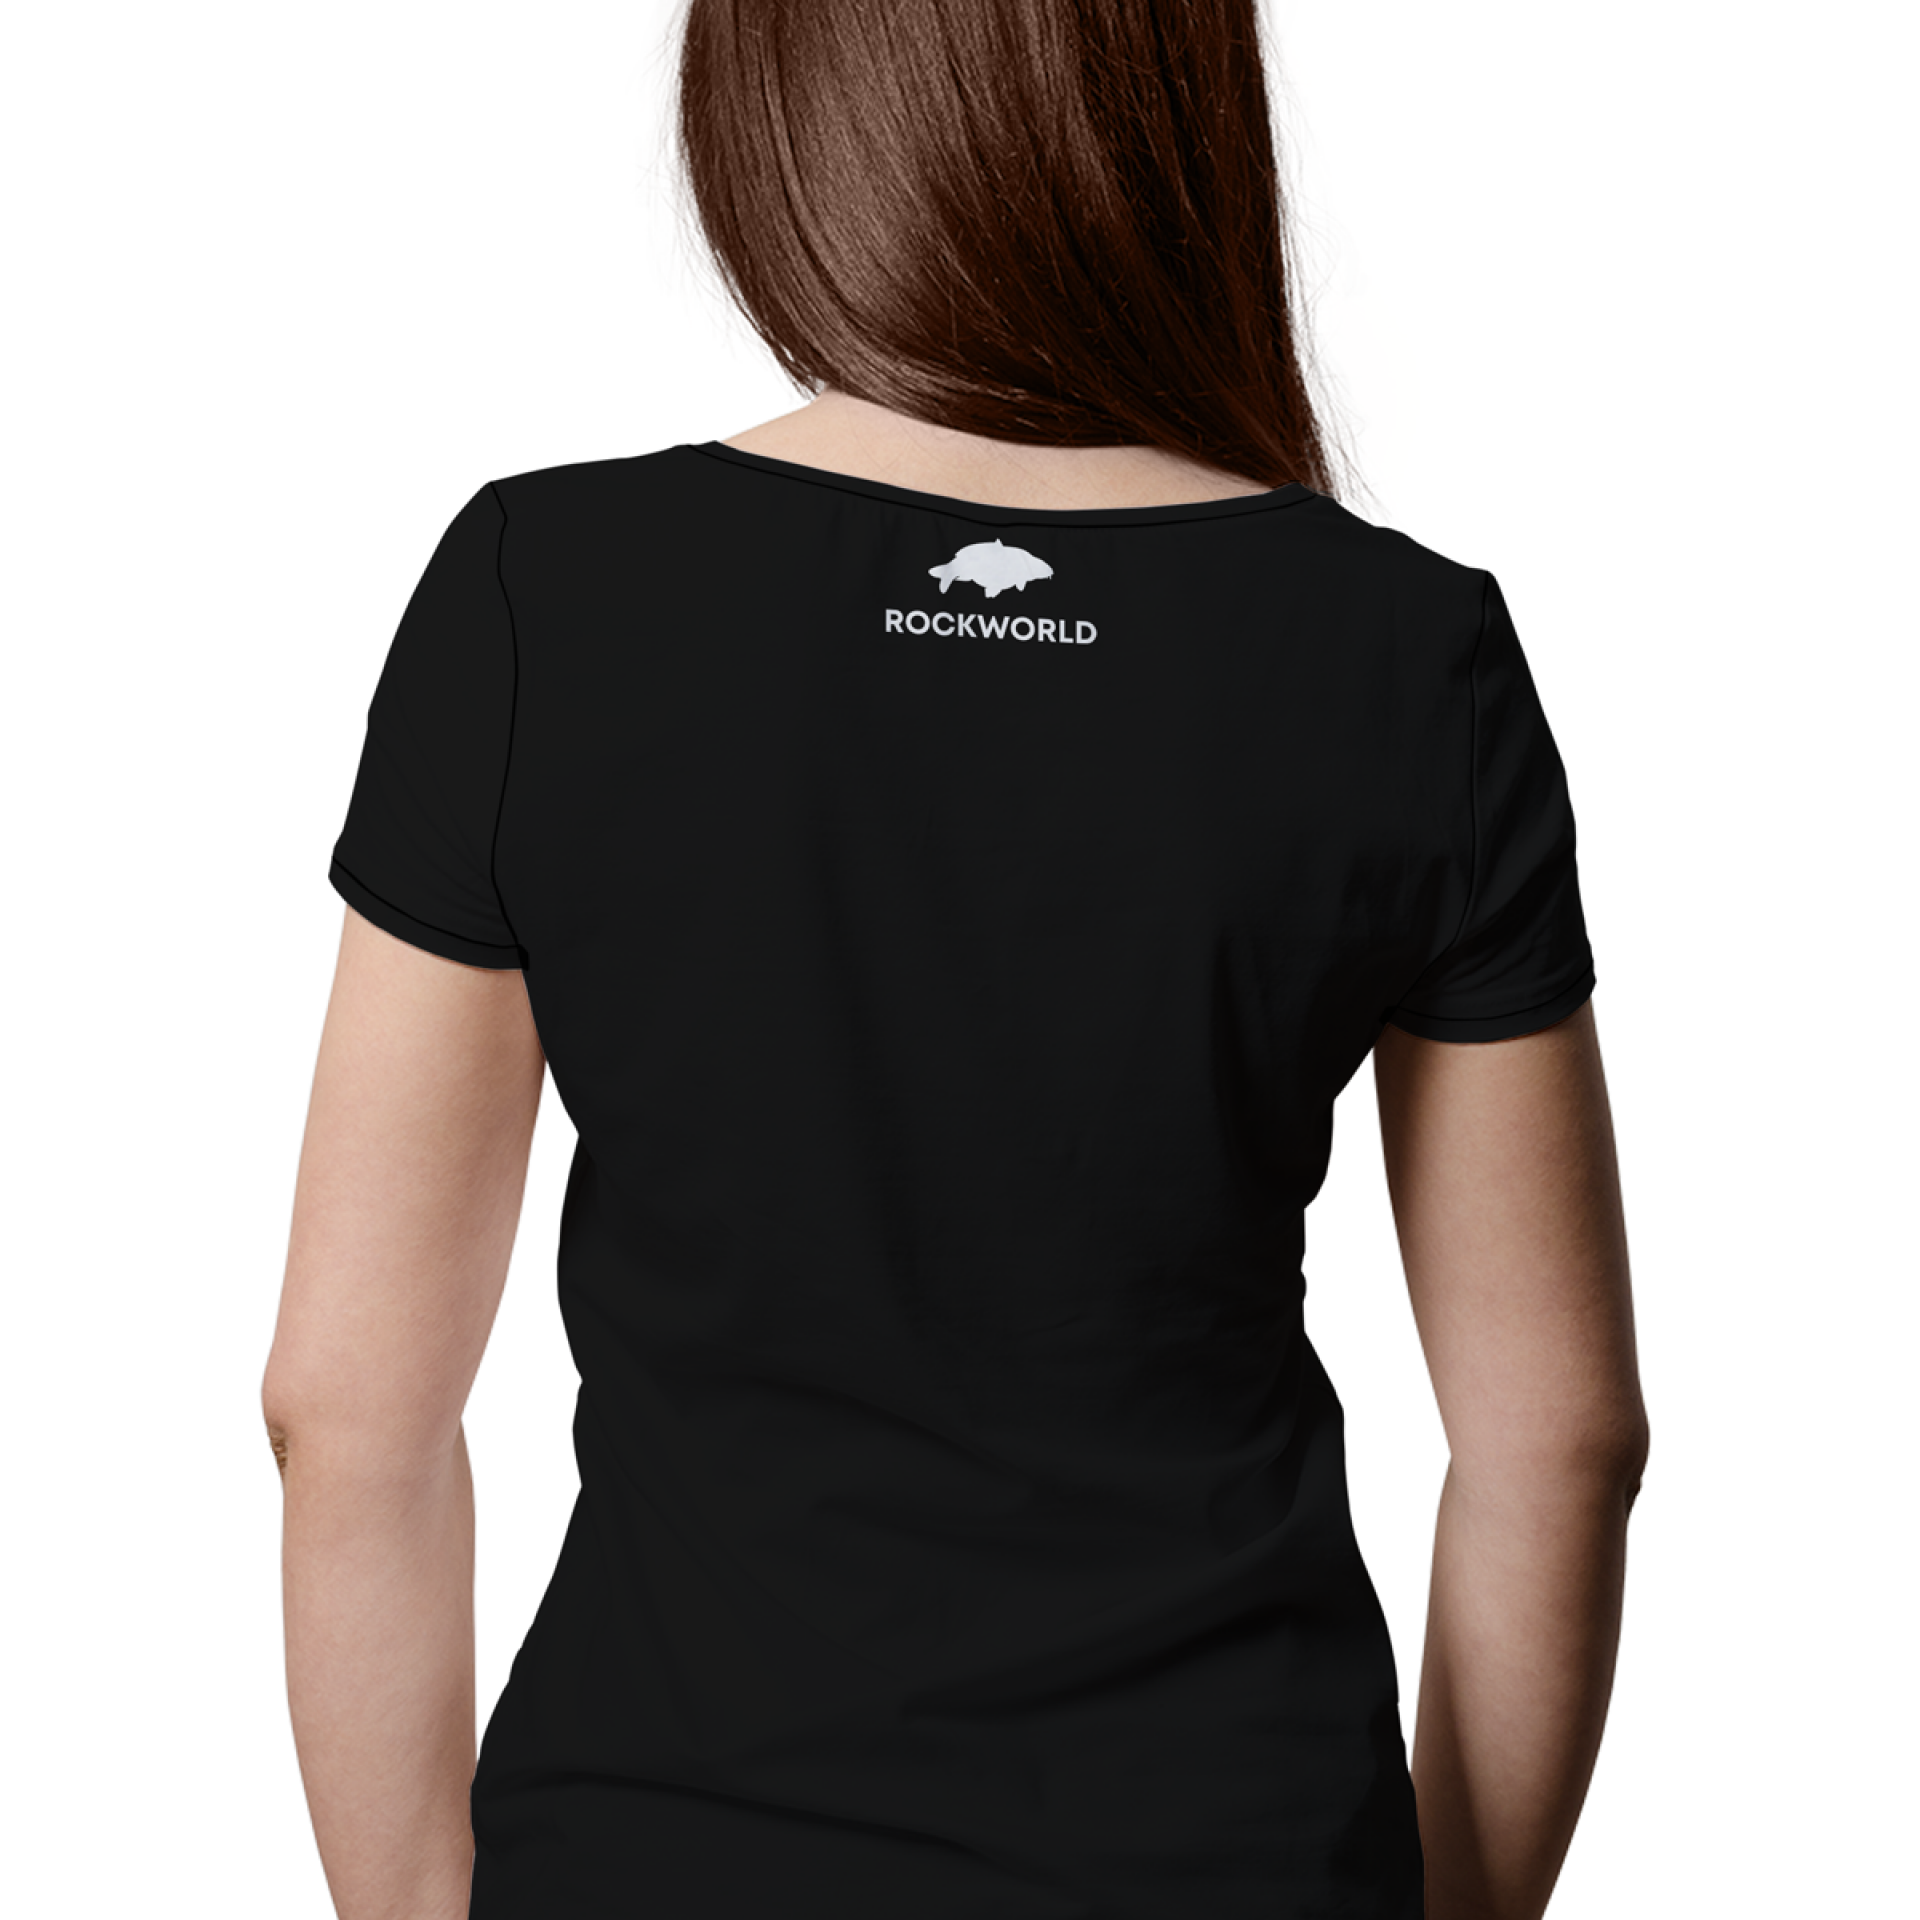 Rockworld Carp Touch - maglietta nera da donna